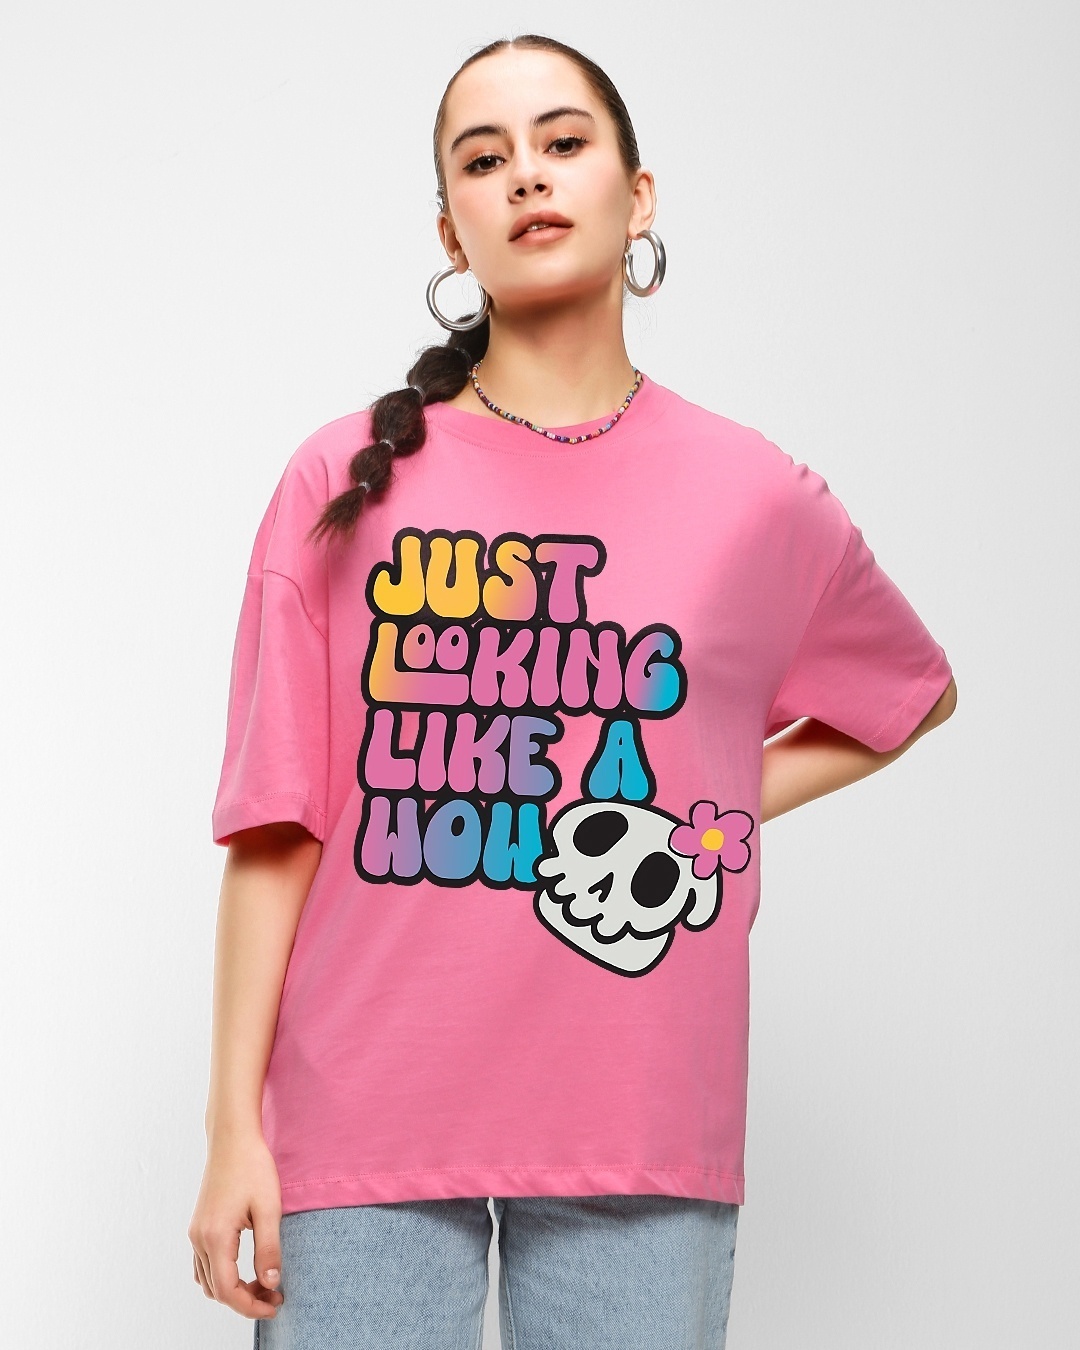 Buy Bewakoof Official The Office Merchandise Bewakoof Women's Pink Graphic  Boxy T-shirt online